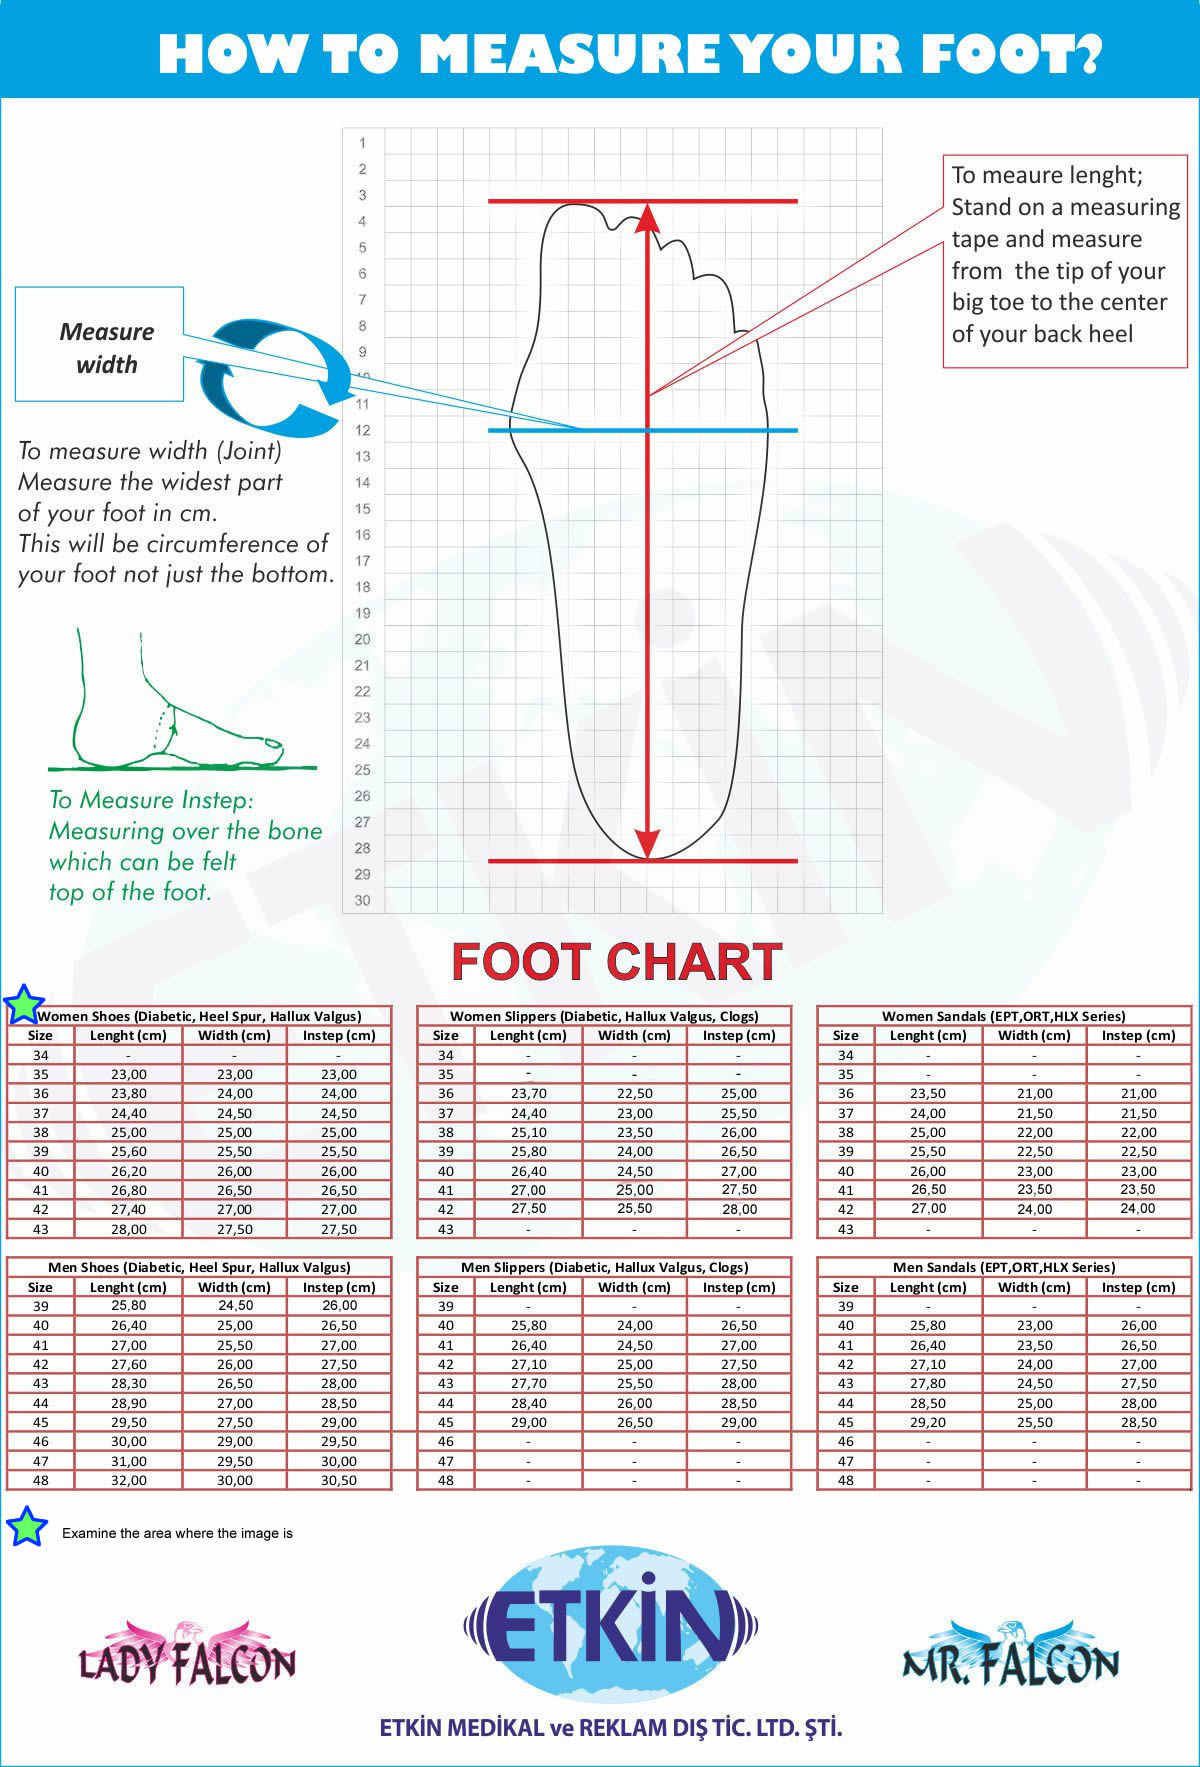 Women plantar fasciitis shoes size chart